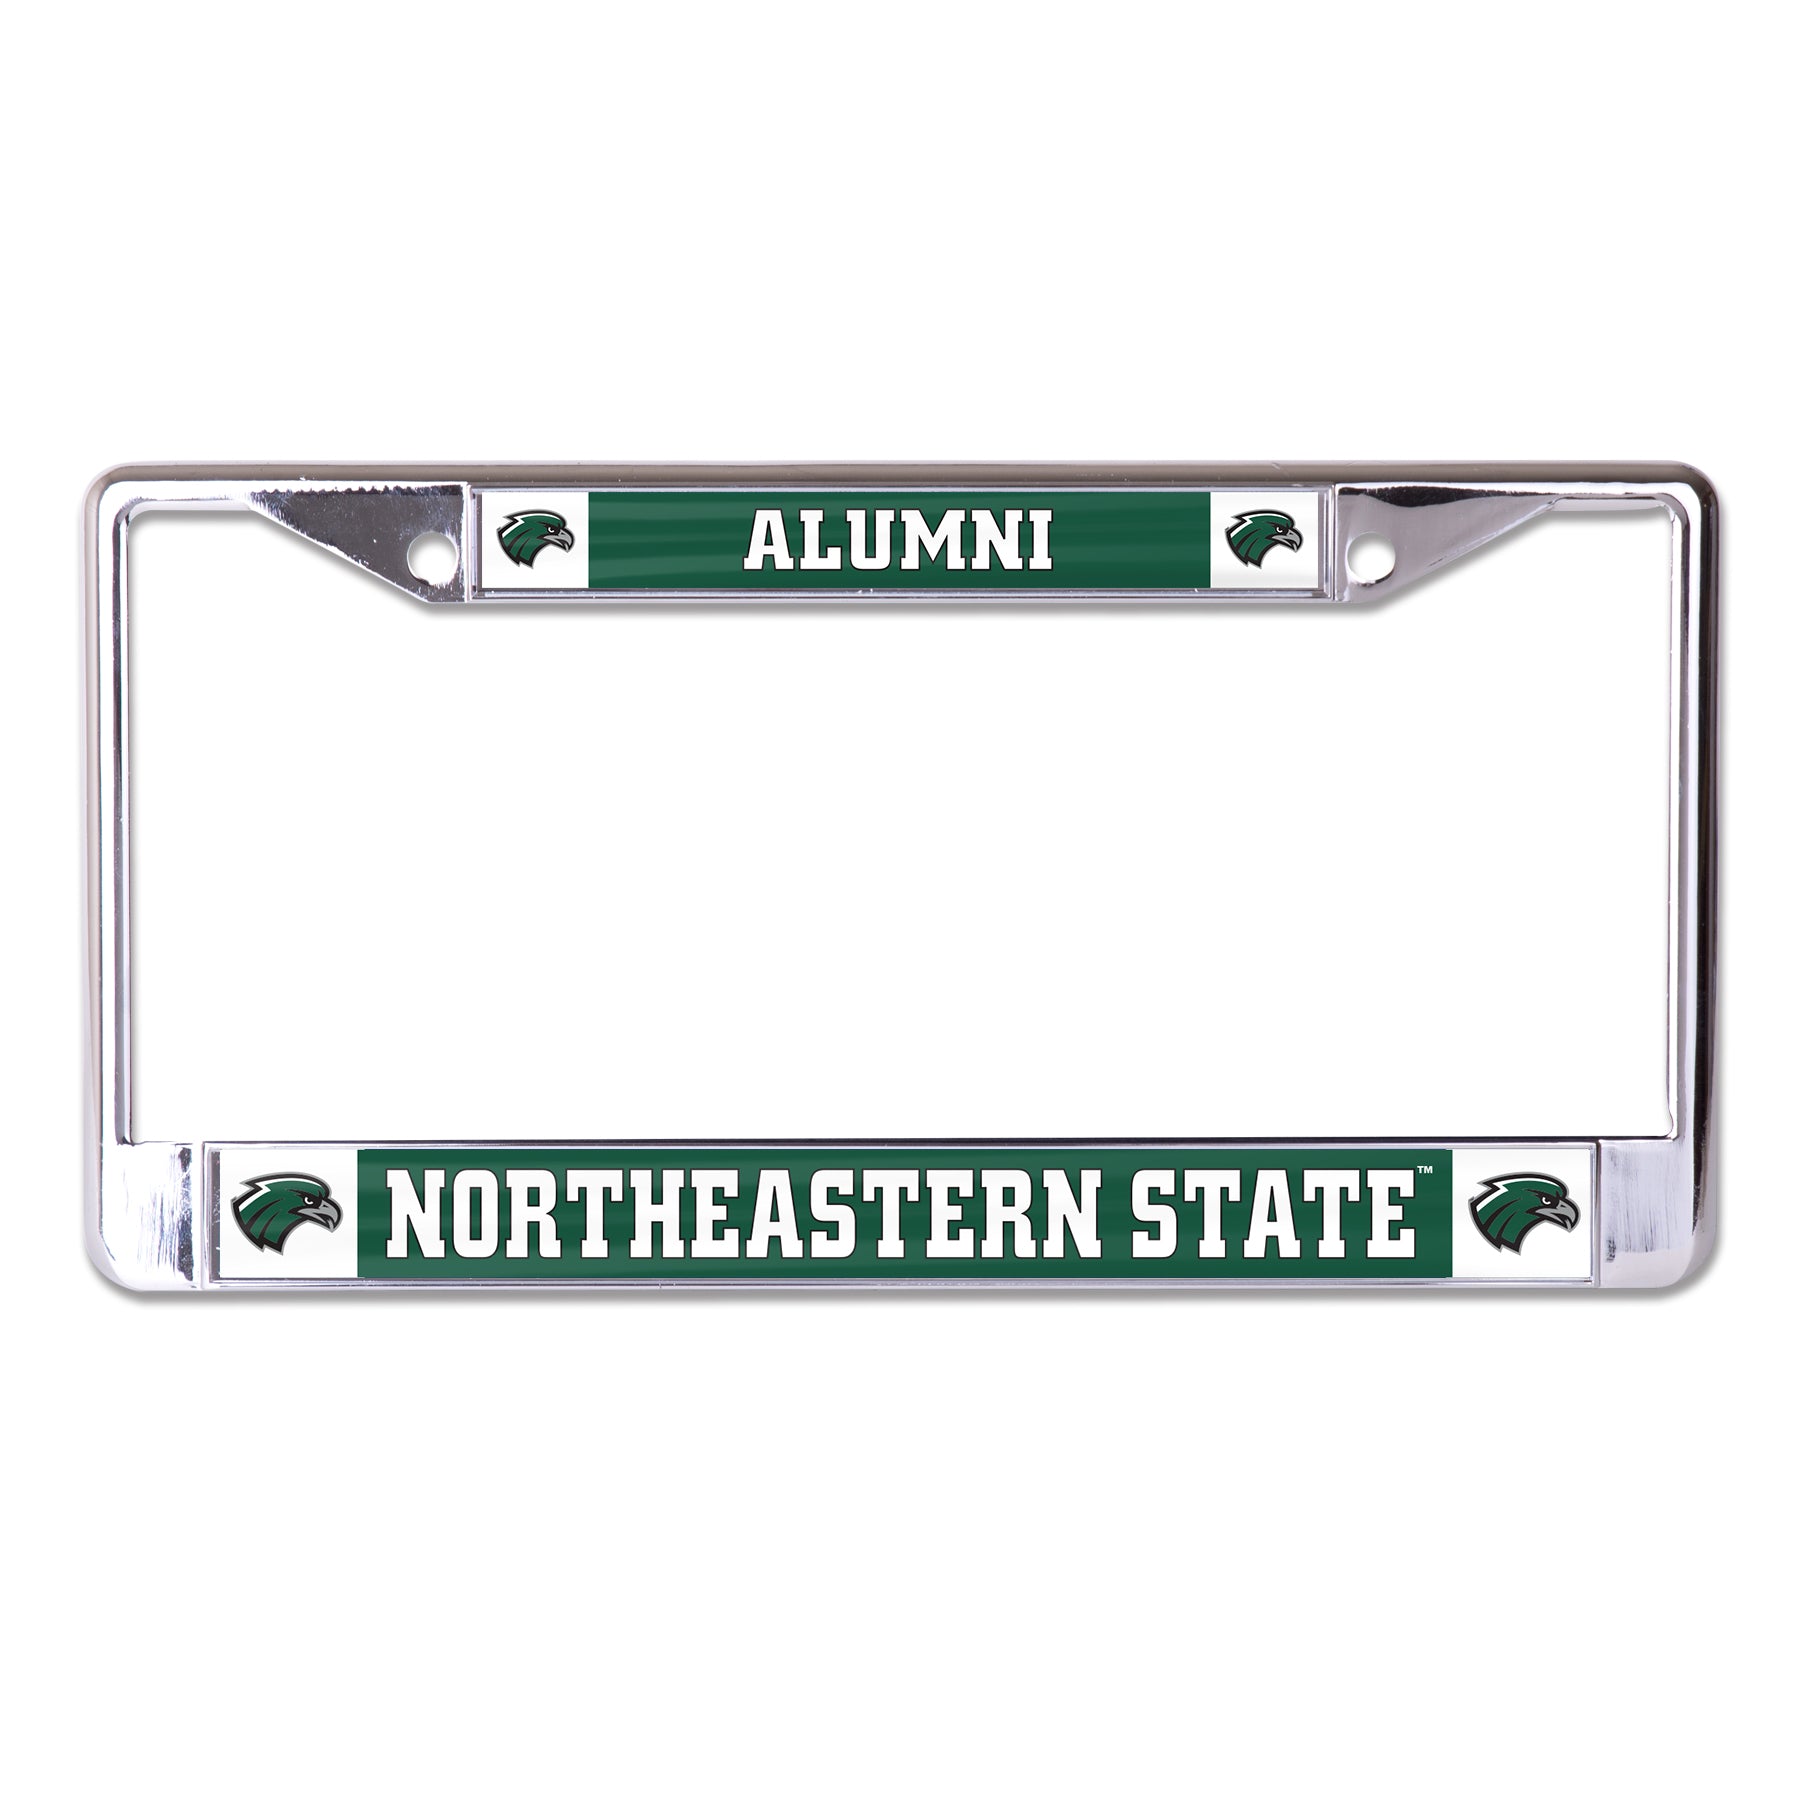 Northeastern State University Alumni Chrome License Plate Frame